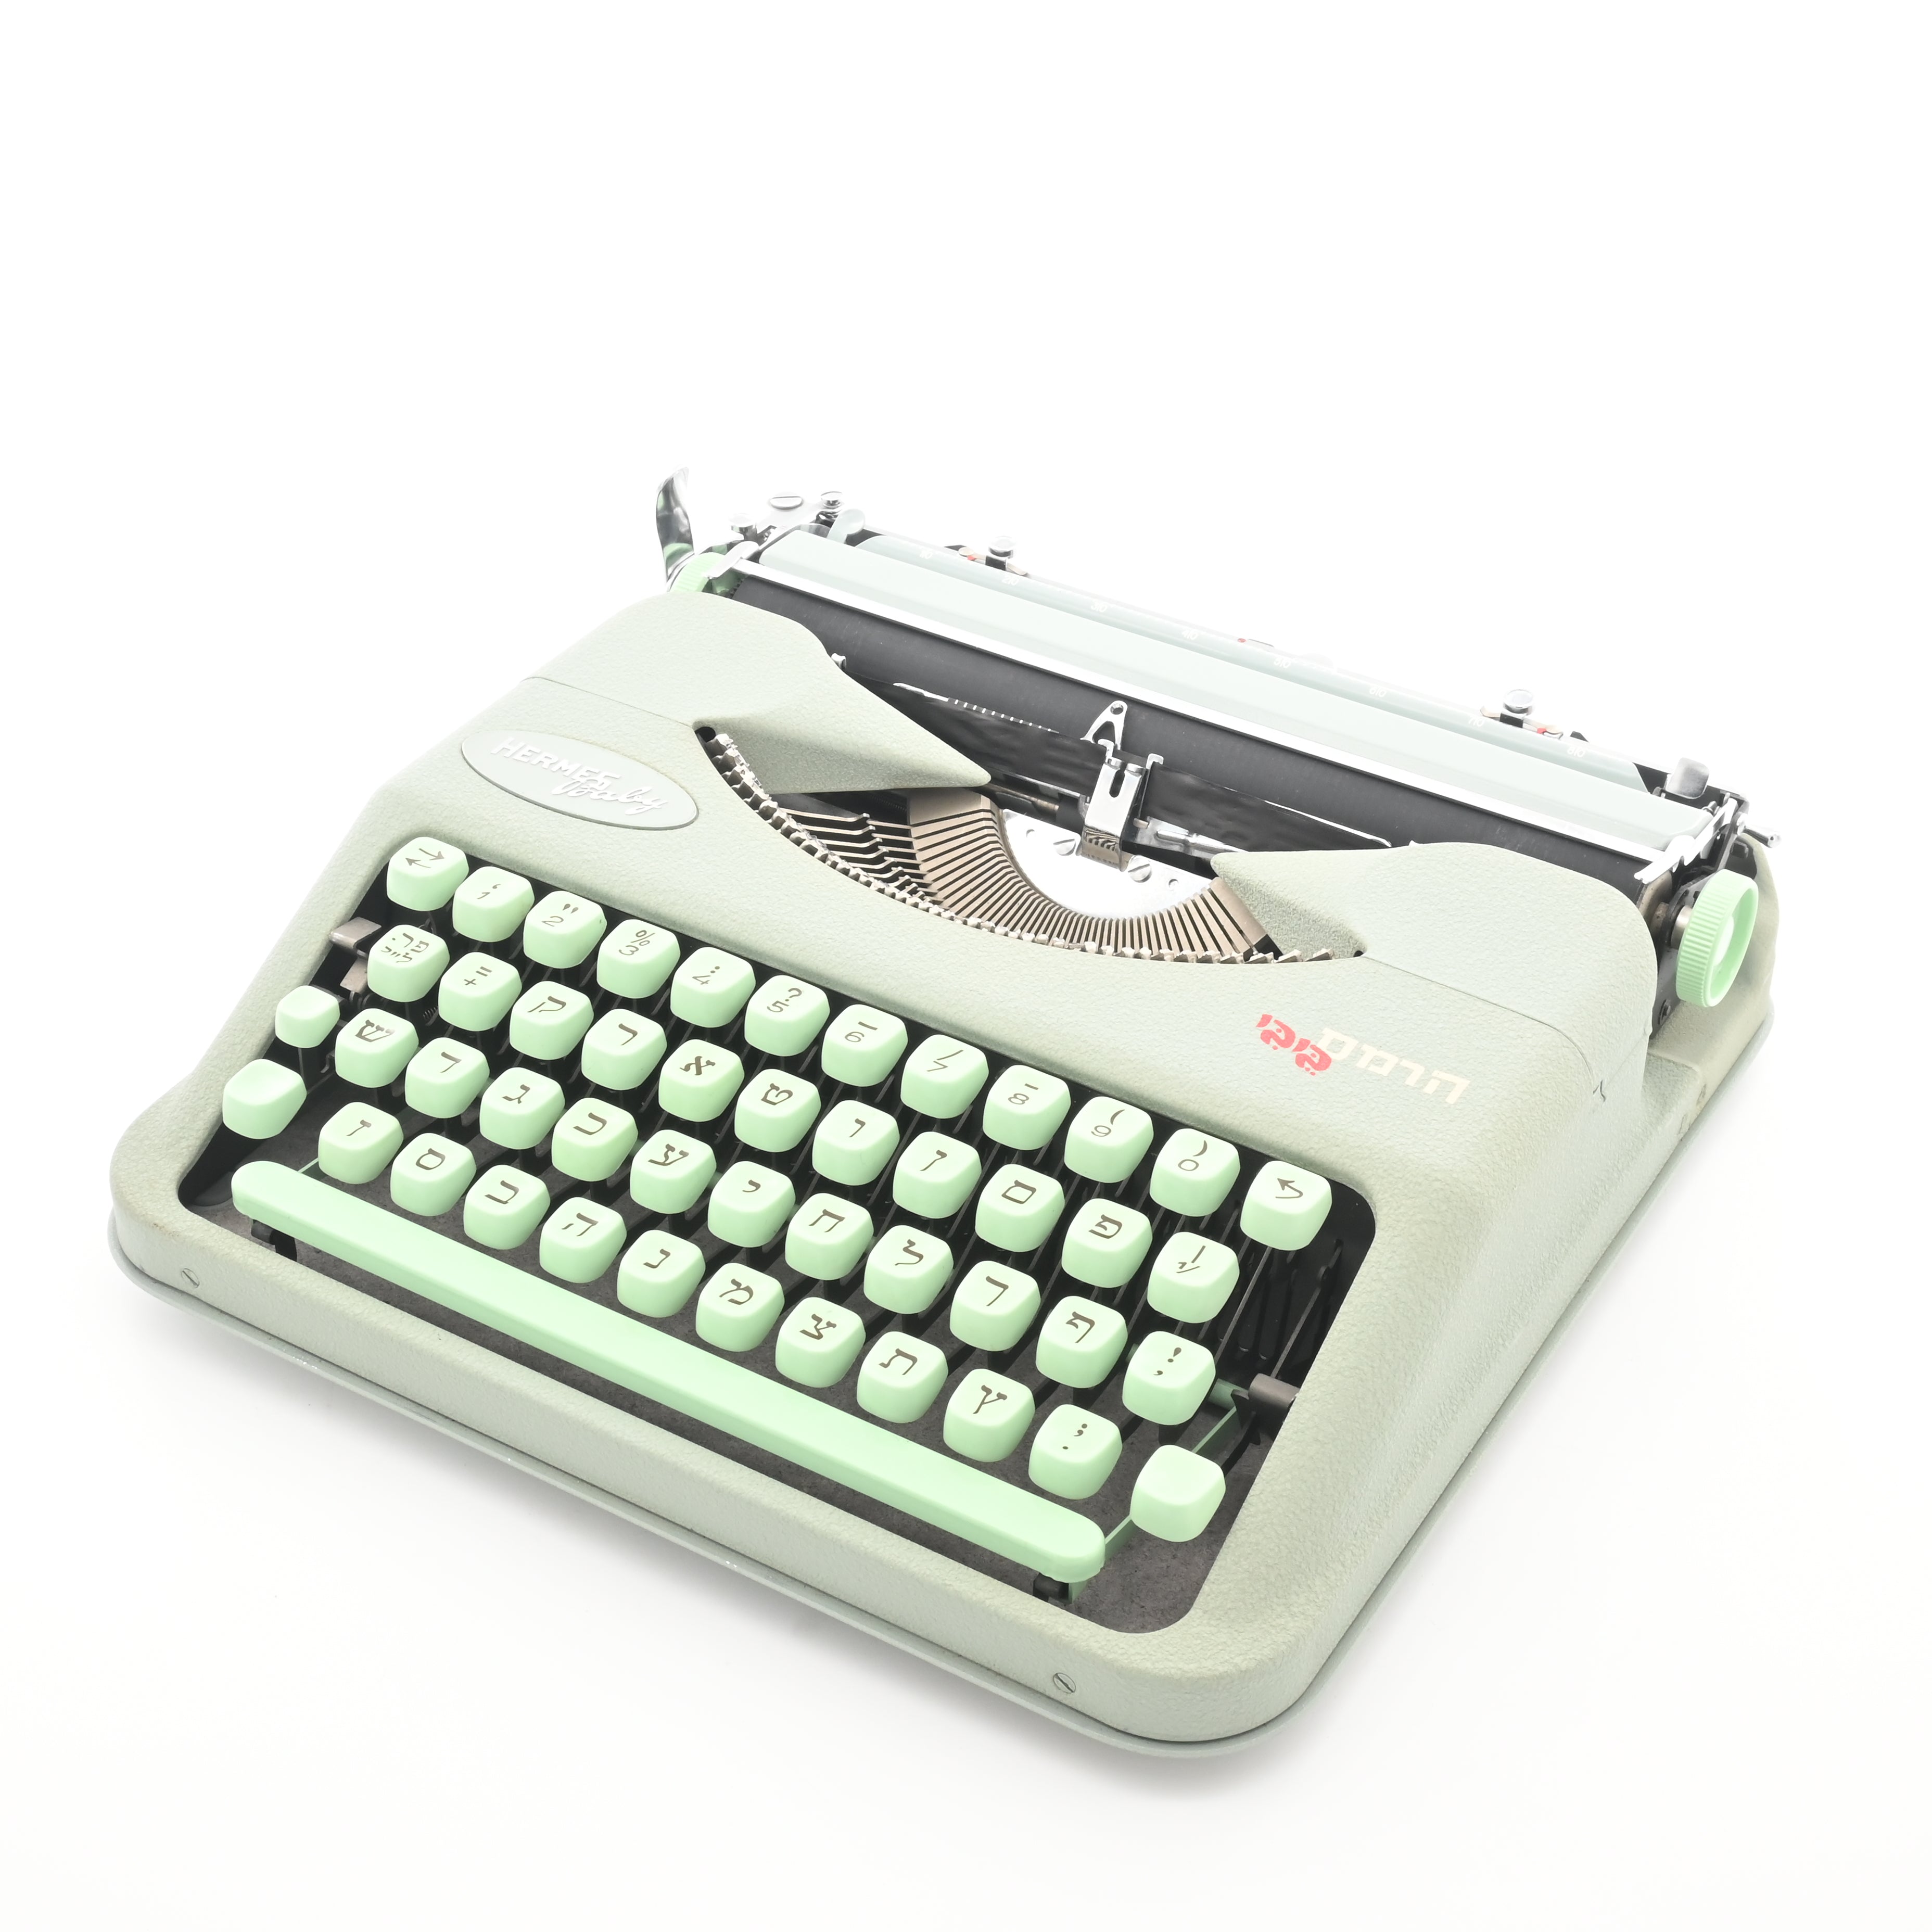 10 Unusual gifts for kids  Typewriter, Vintage typewriters